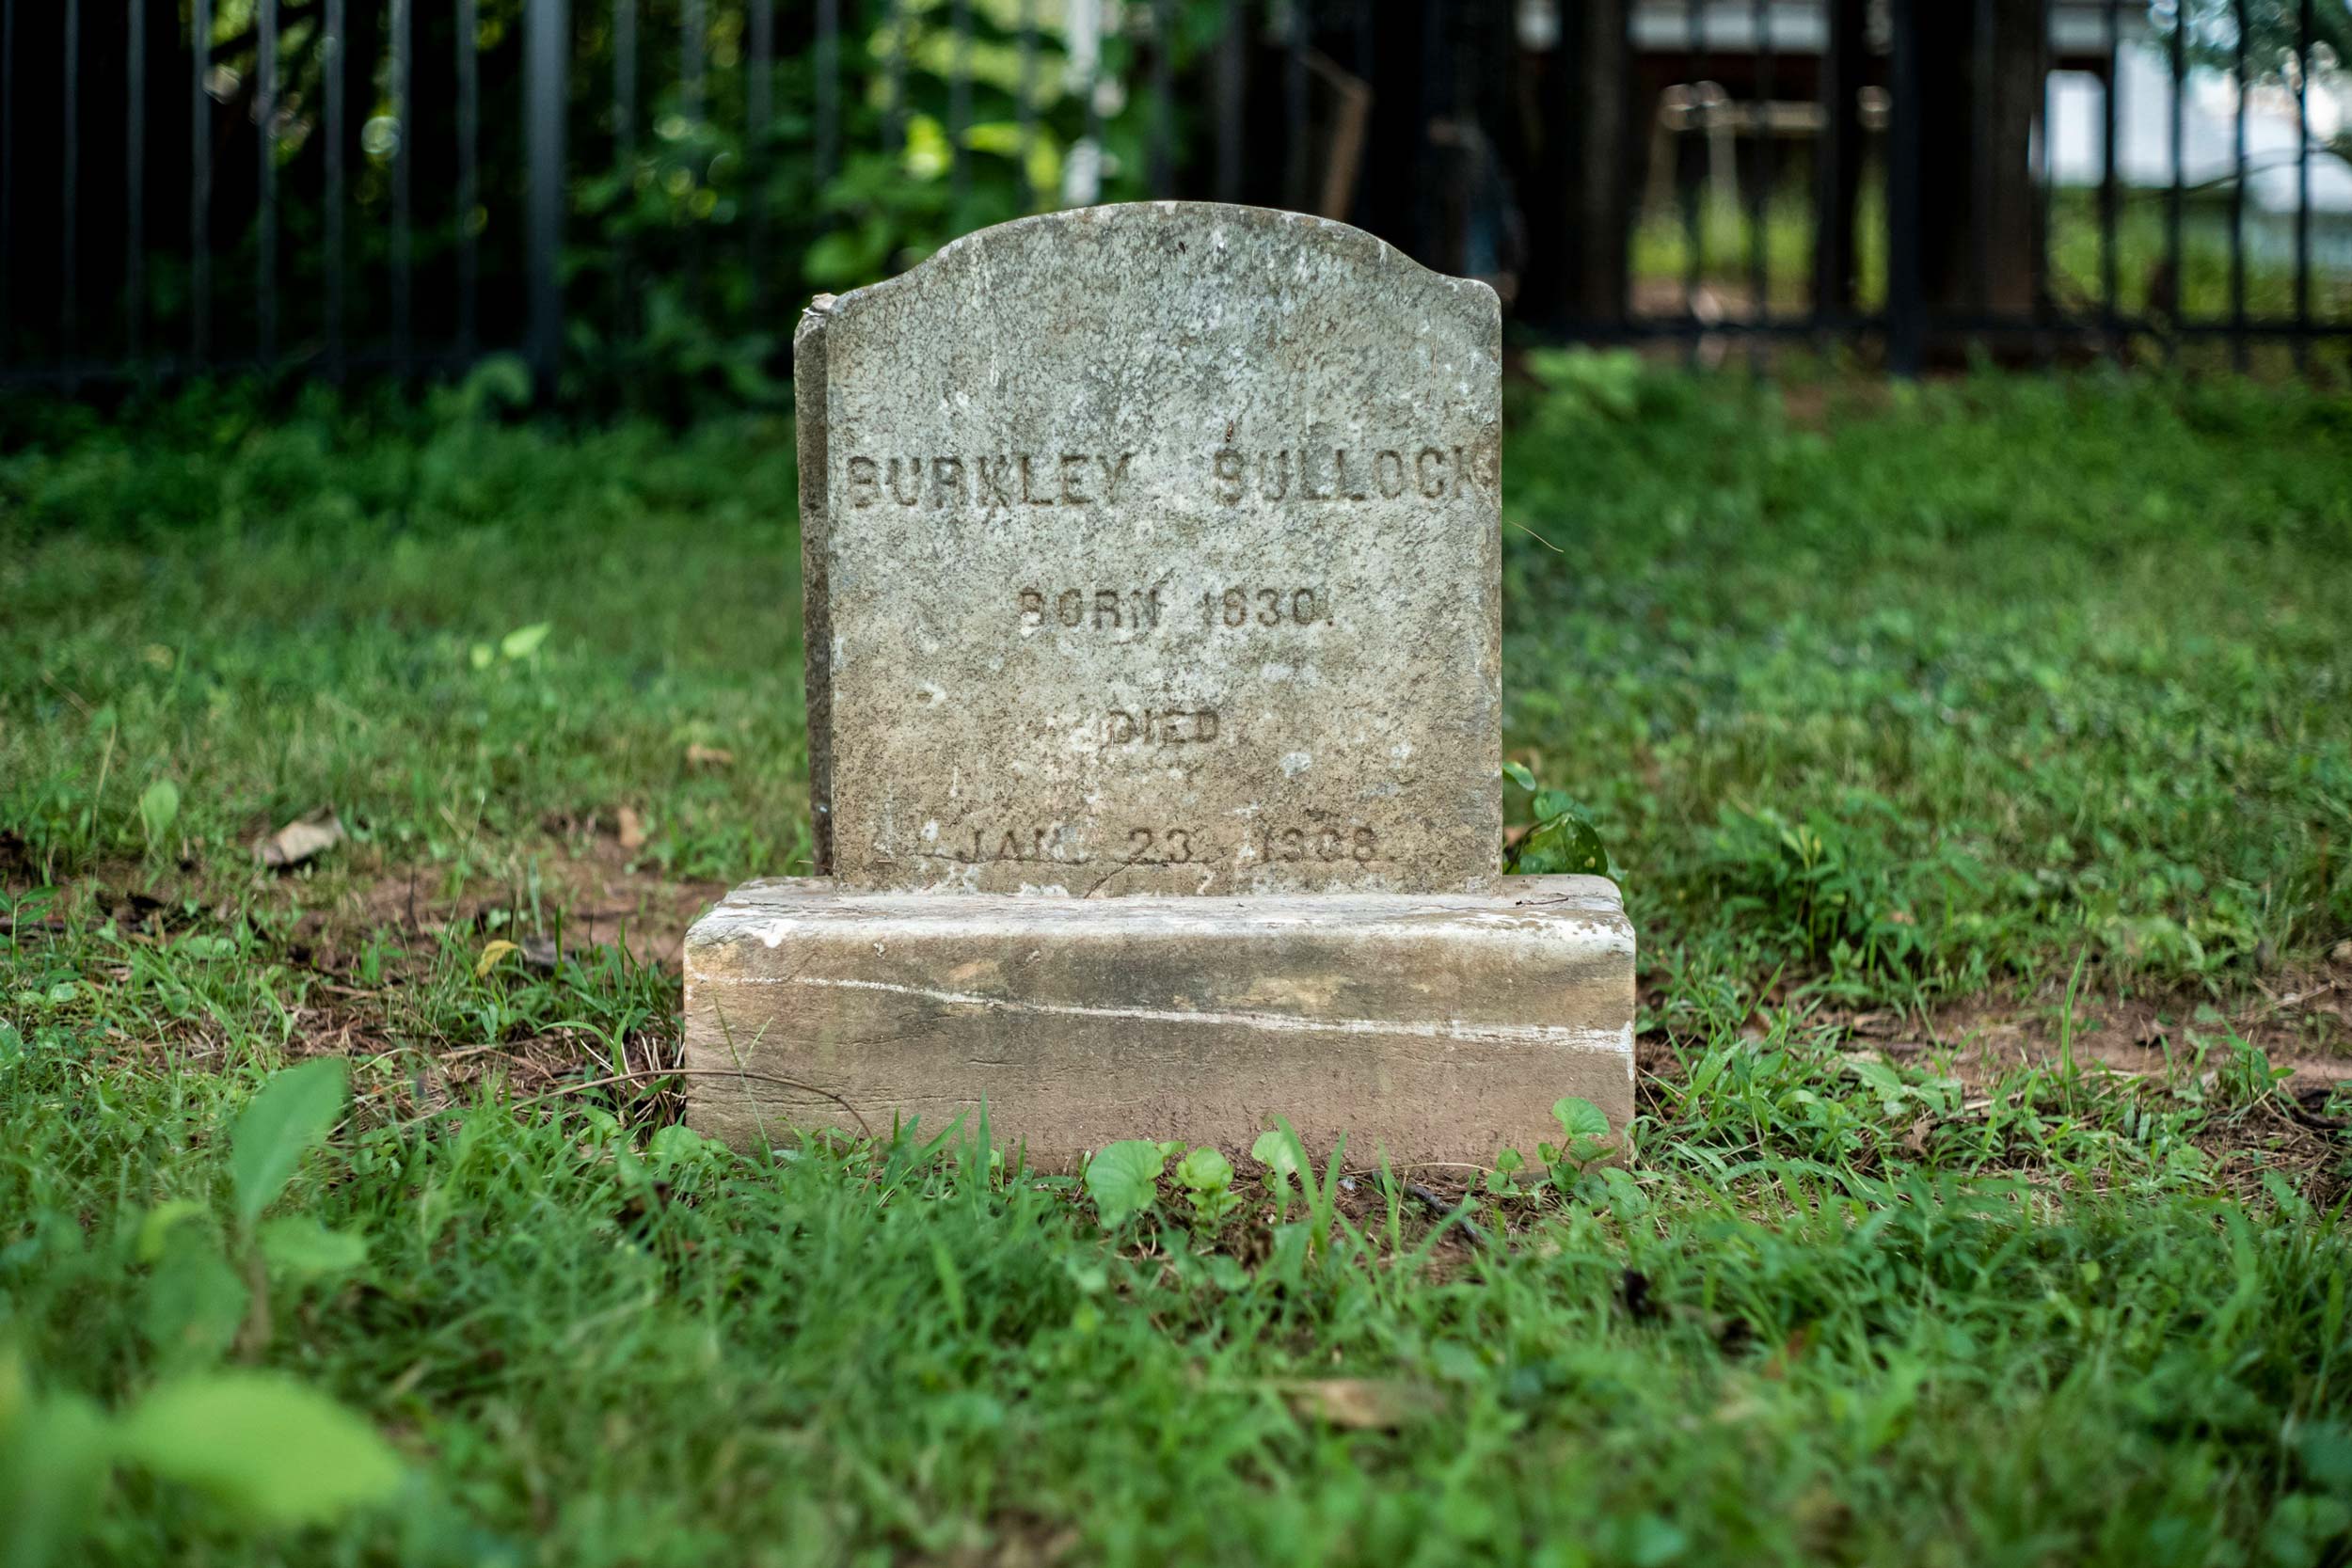 Burkley Bullock tombstone